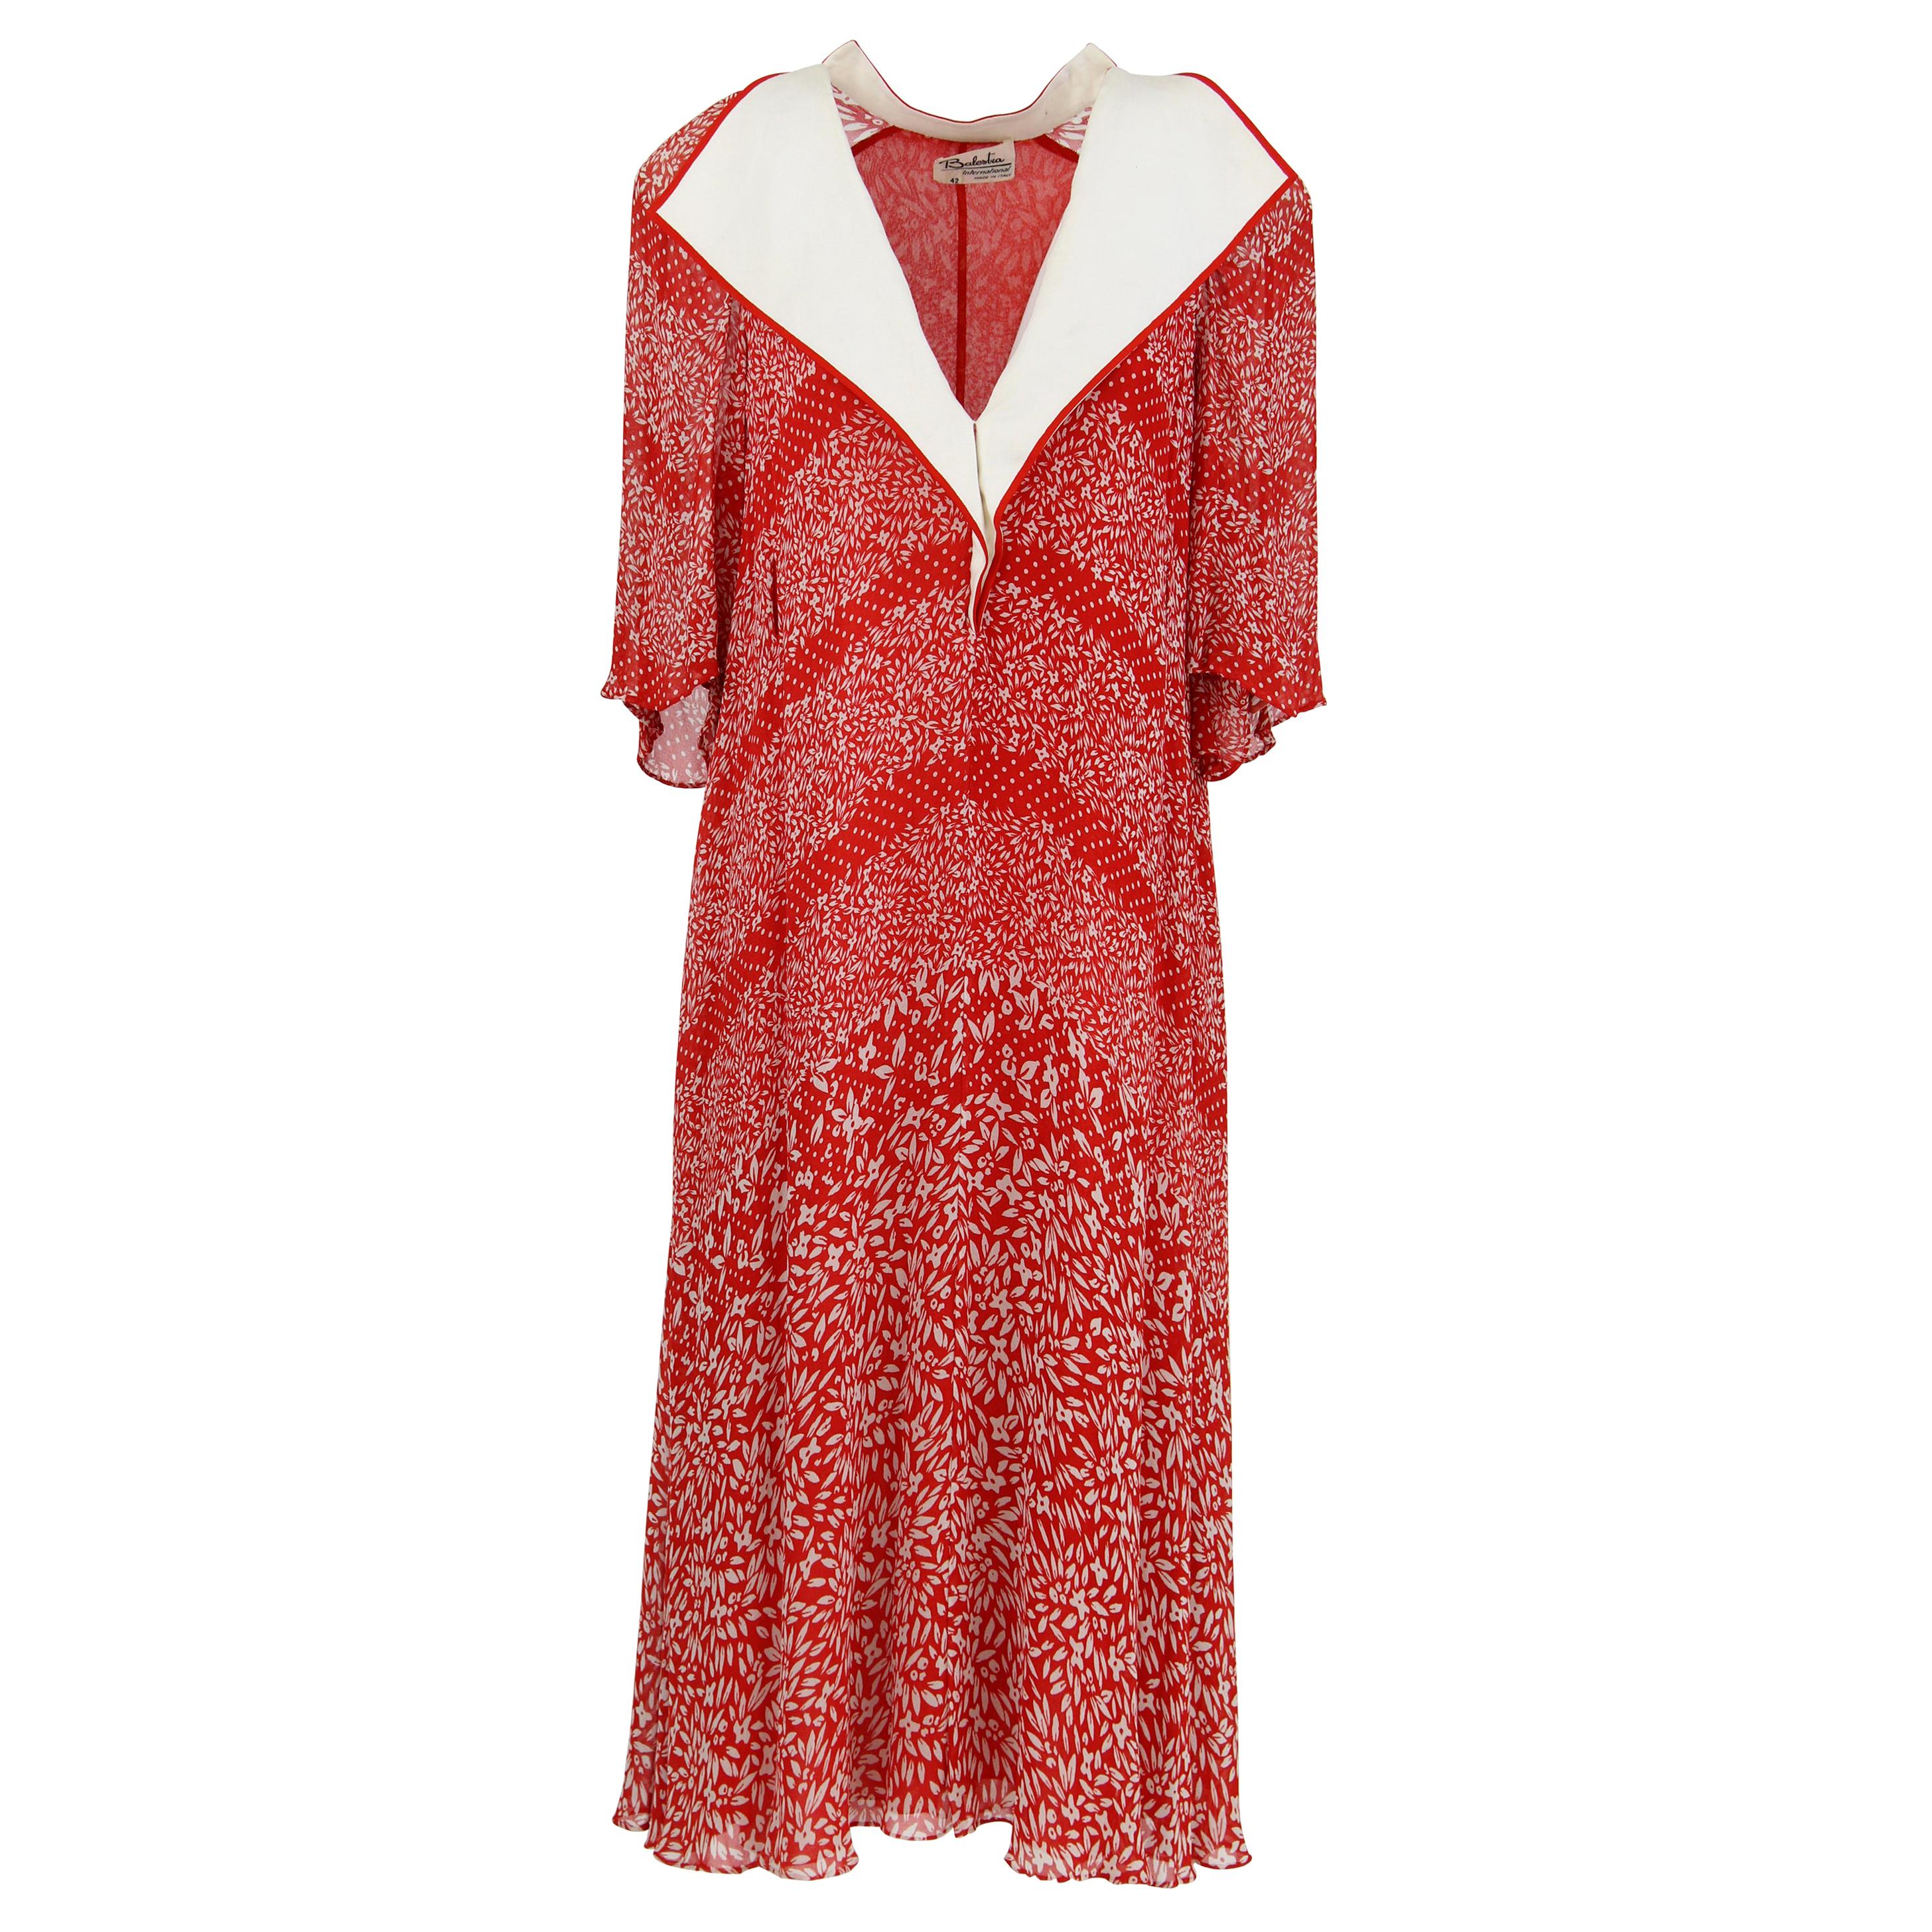 1970S Renato Balestra Red and White Dress